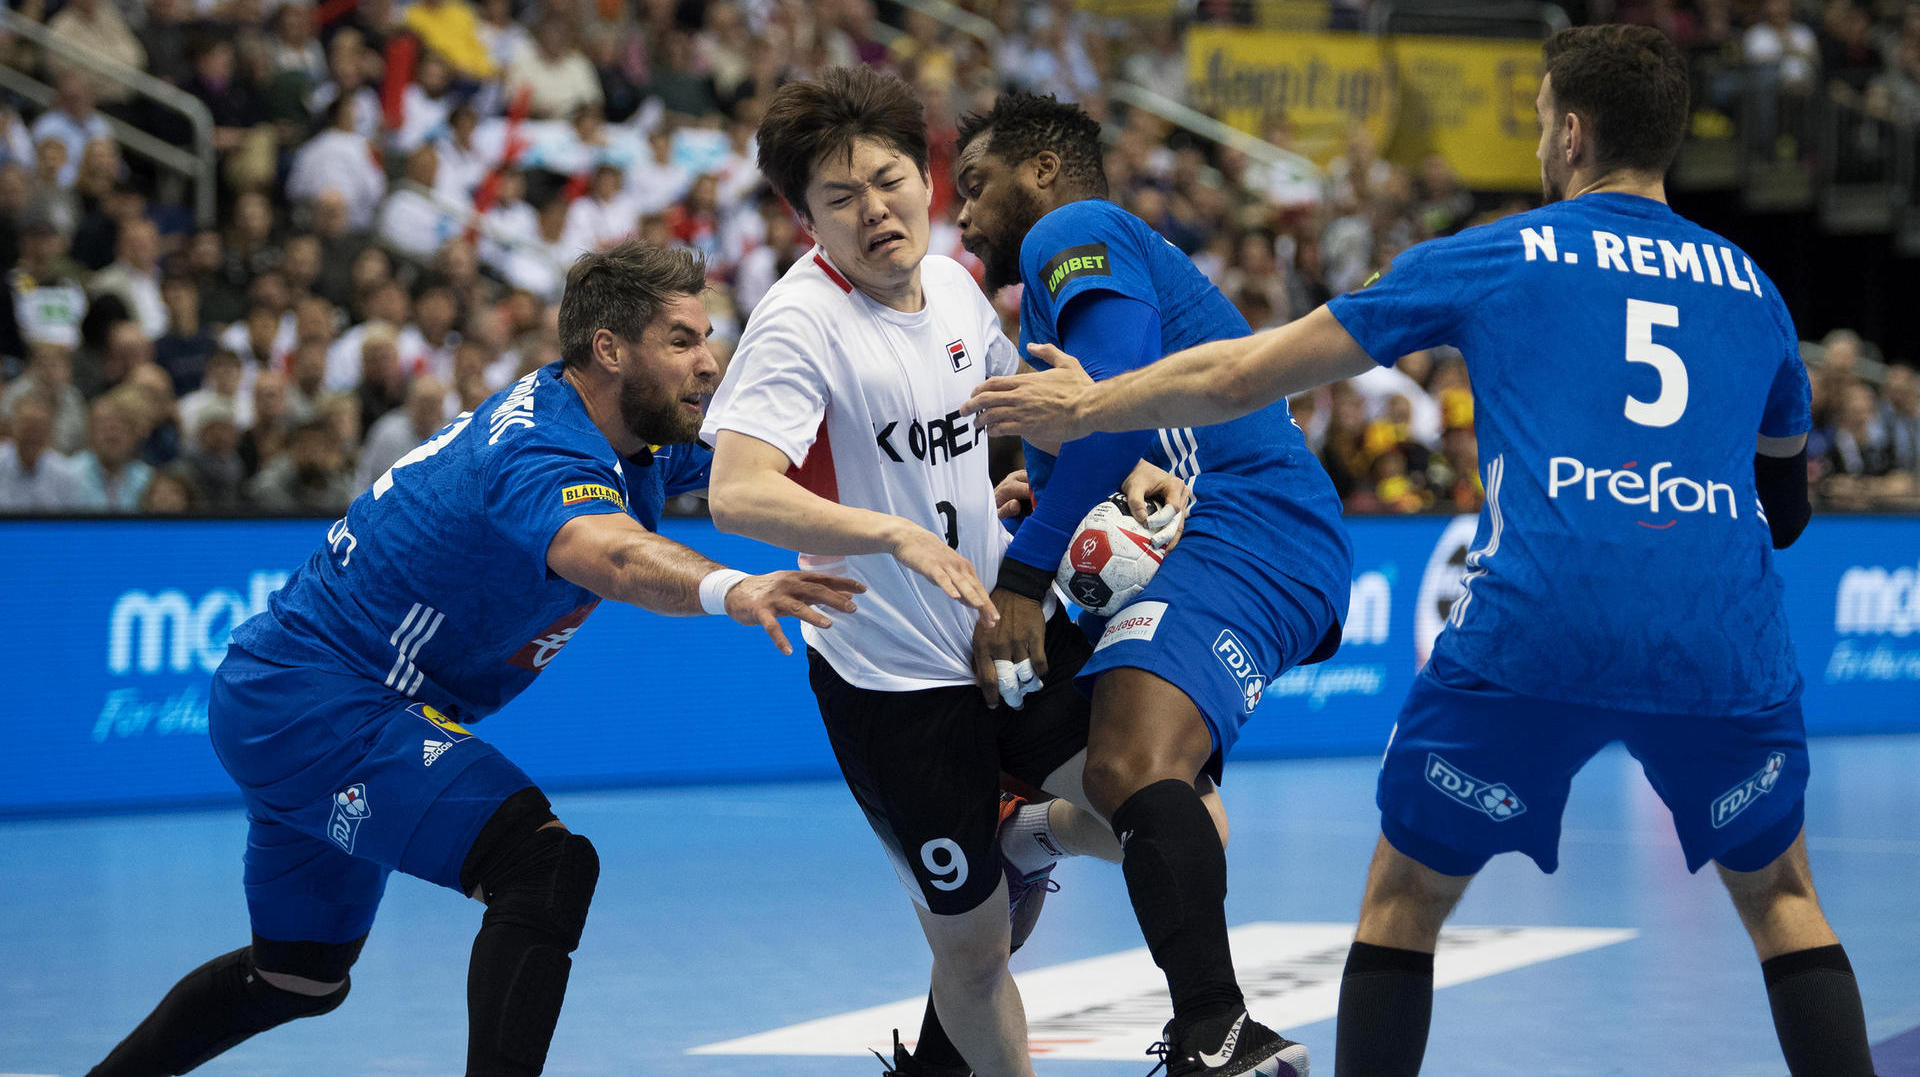 Handball Wm Tabelle
 Handball WM 2019 Frankreich hat Mühe mit Korea – Kroatien